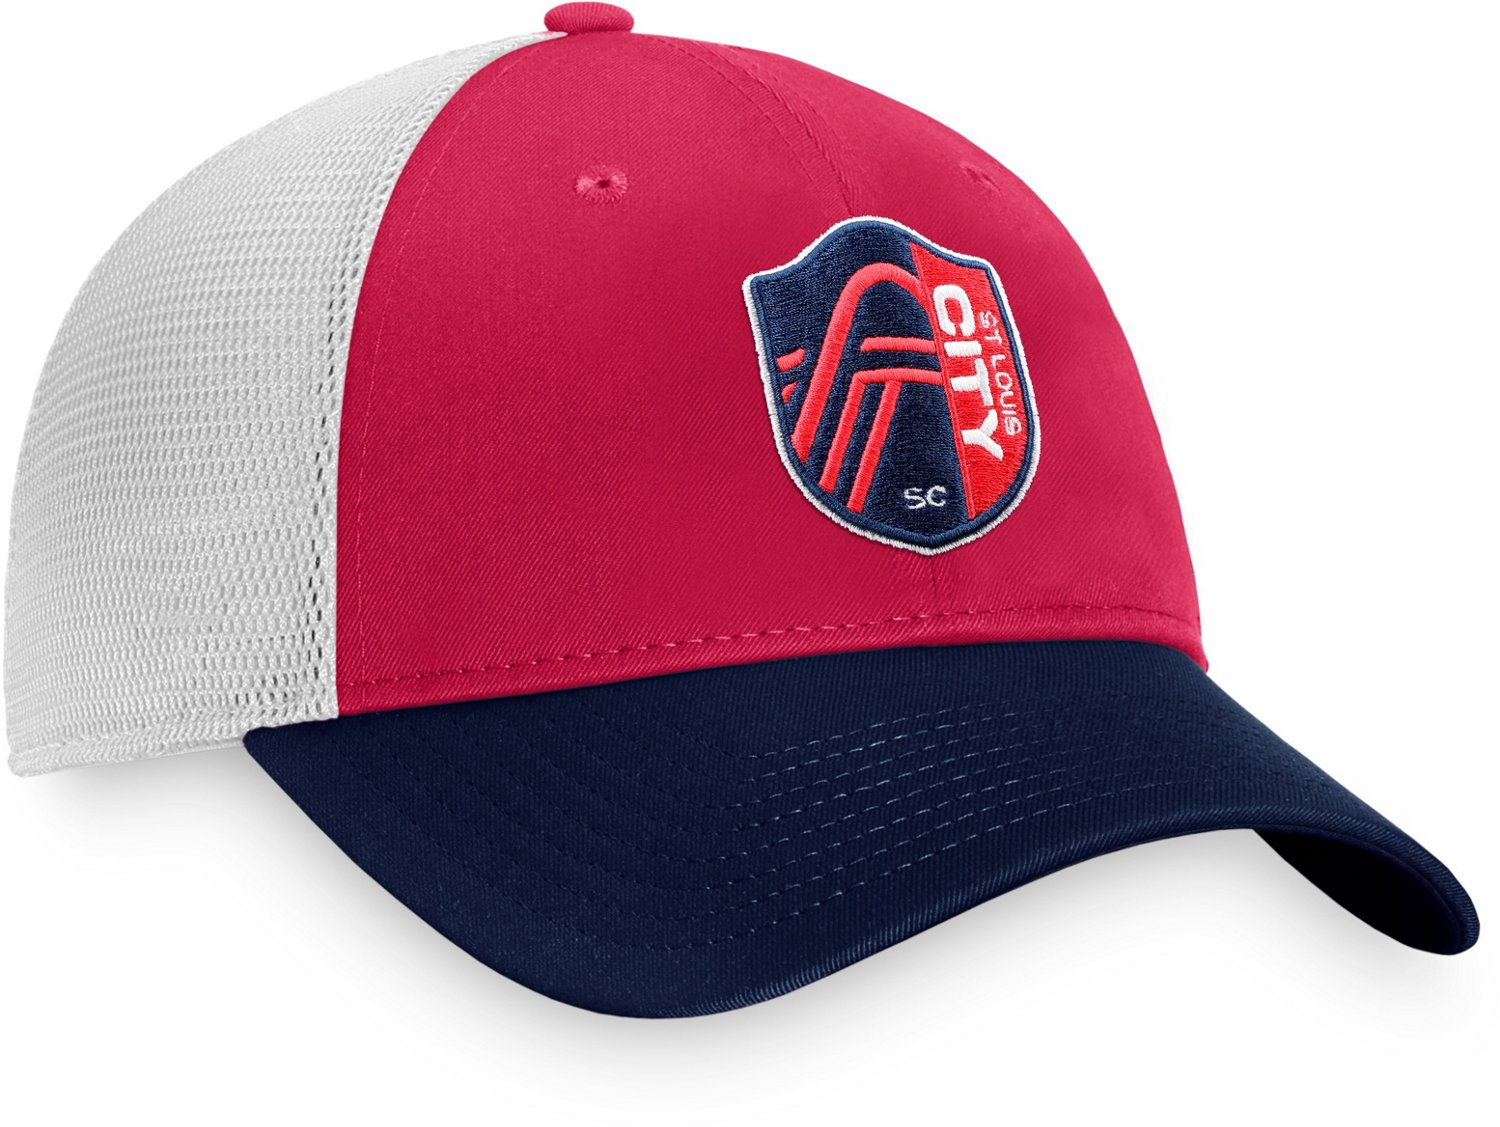 St. Louis City SC Hats, St Louis SC Jerseys, Gear, Merchandise